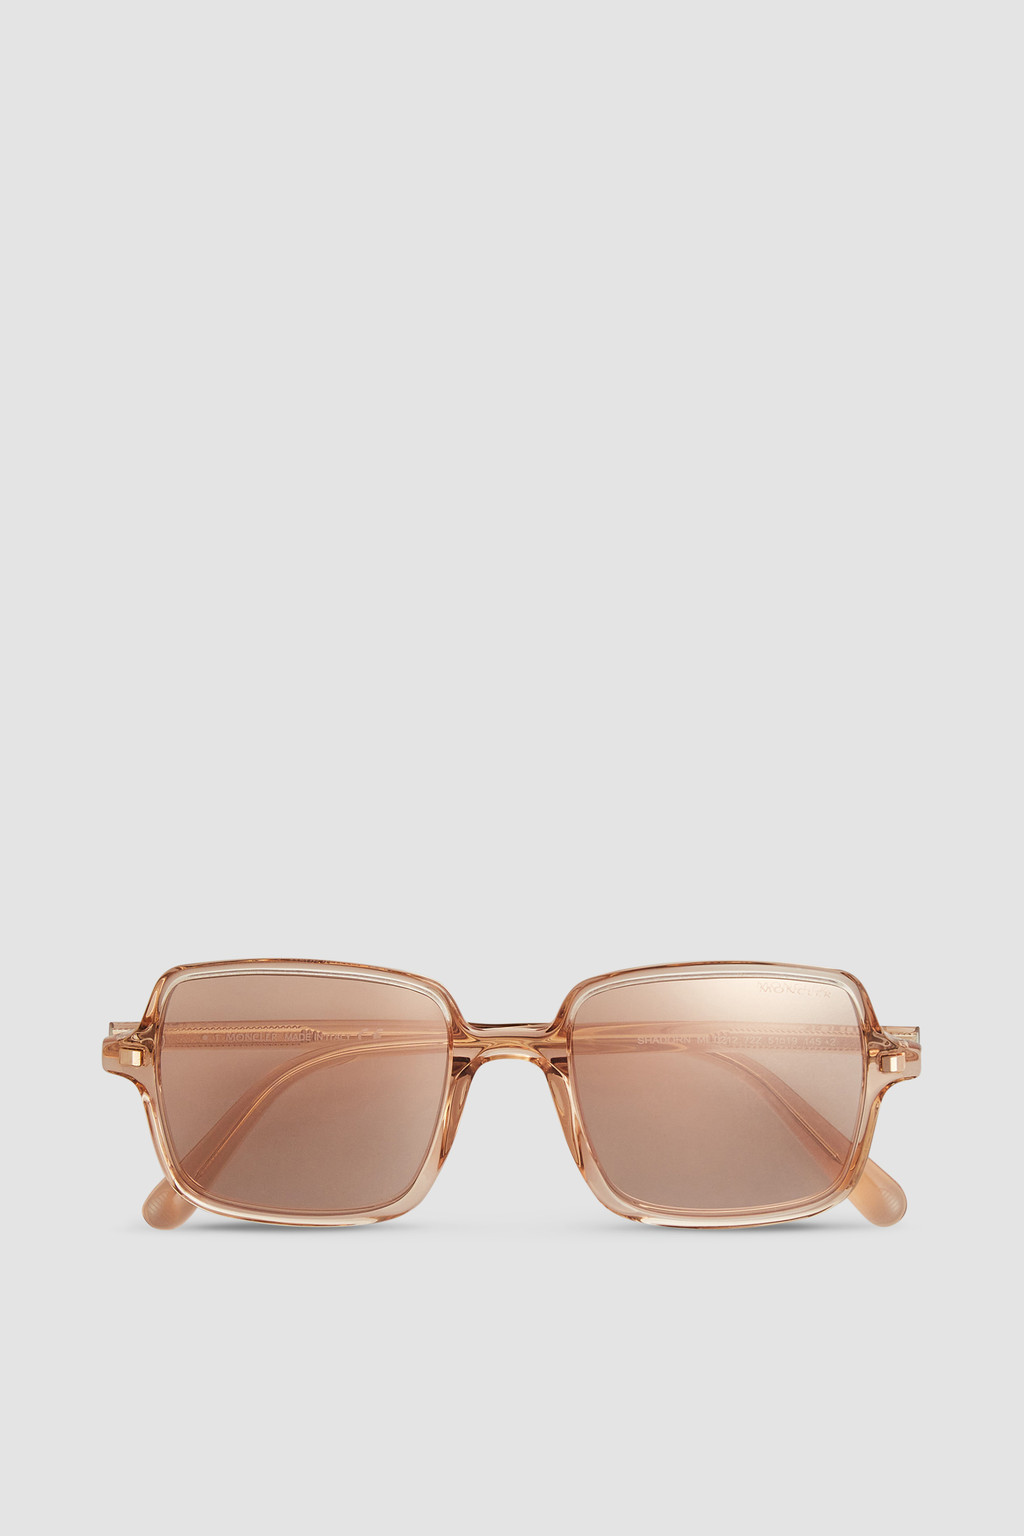 Honey Bee Square Framed Sunglasses | Jess Lea Boutique